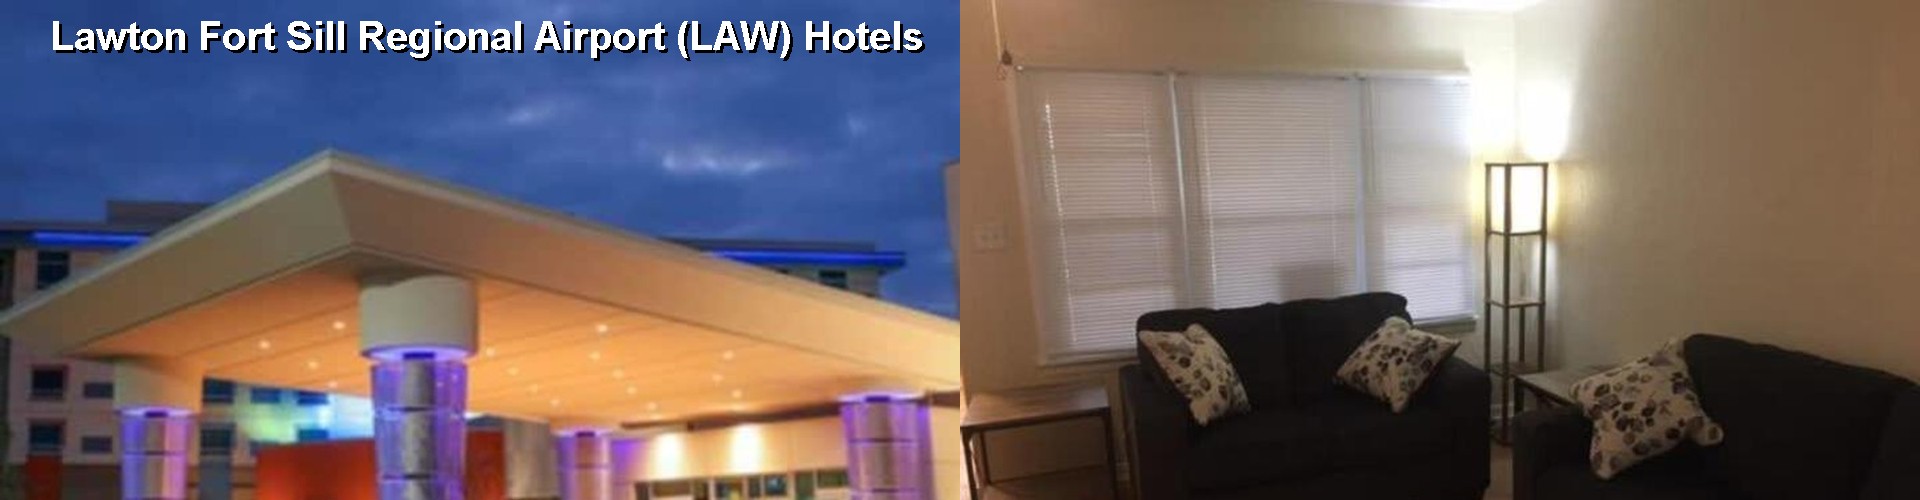 5 Best Hotels near Lawton Fort Sill Regional Airport (LAW)